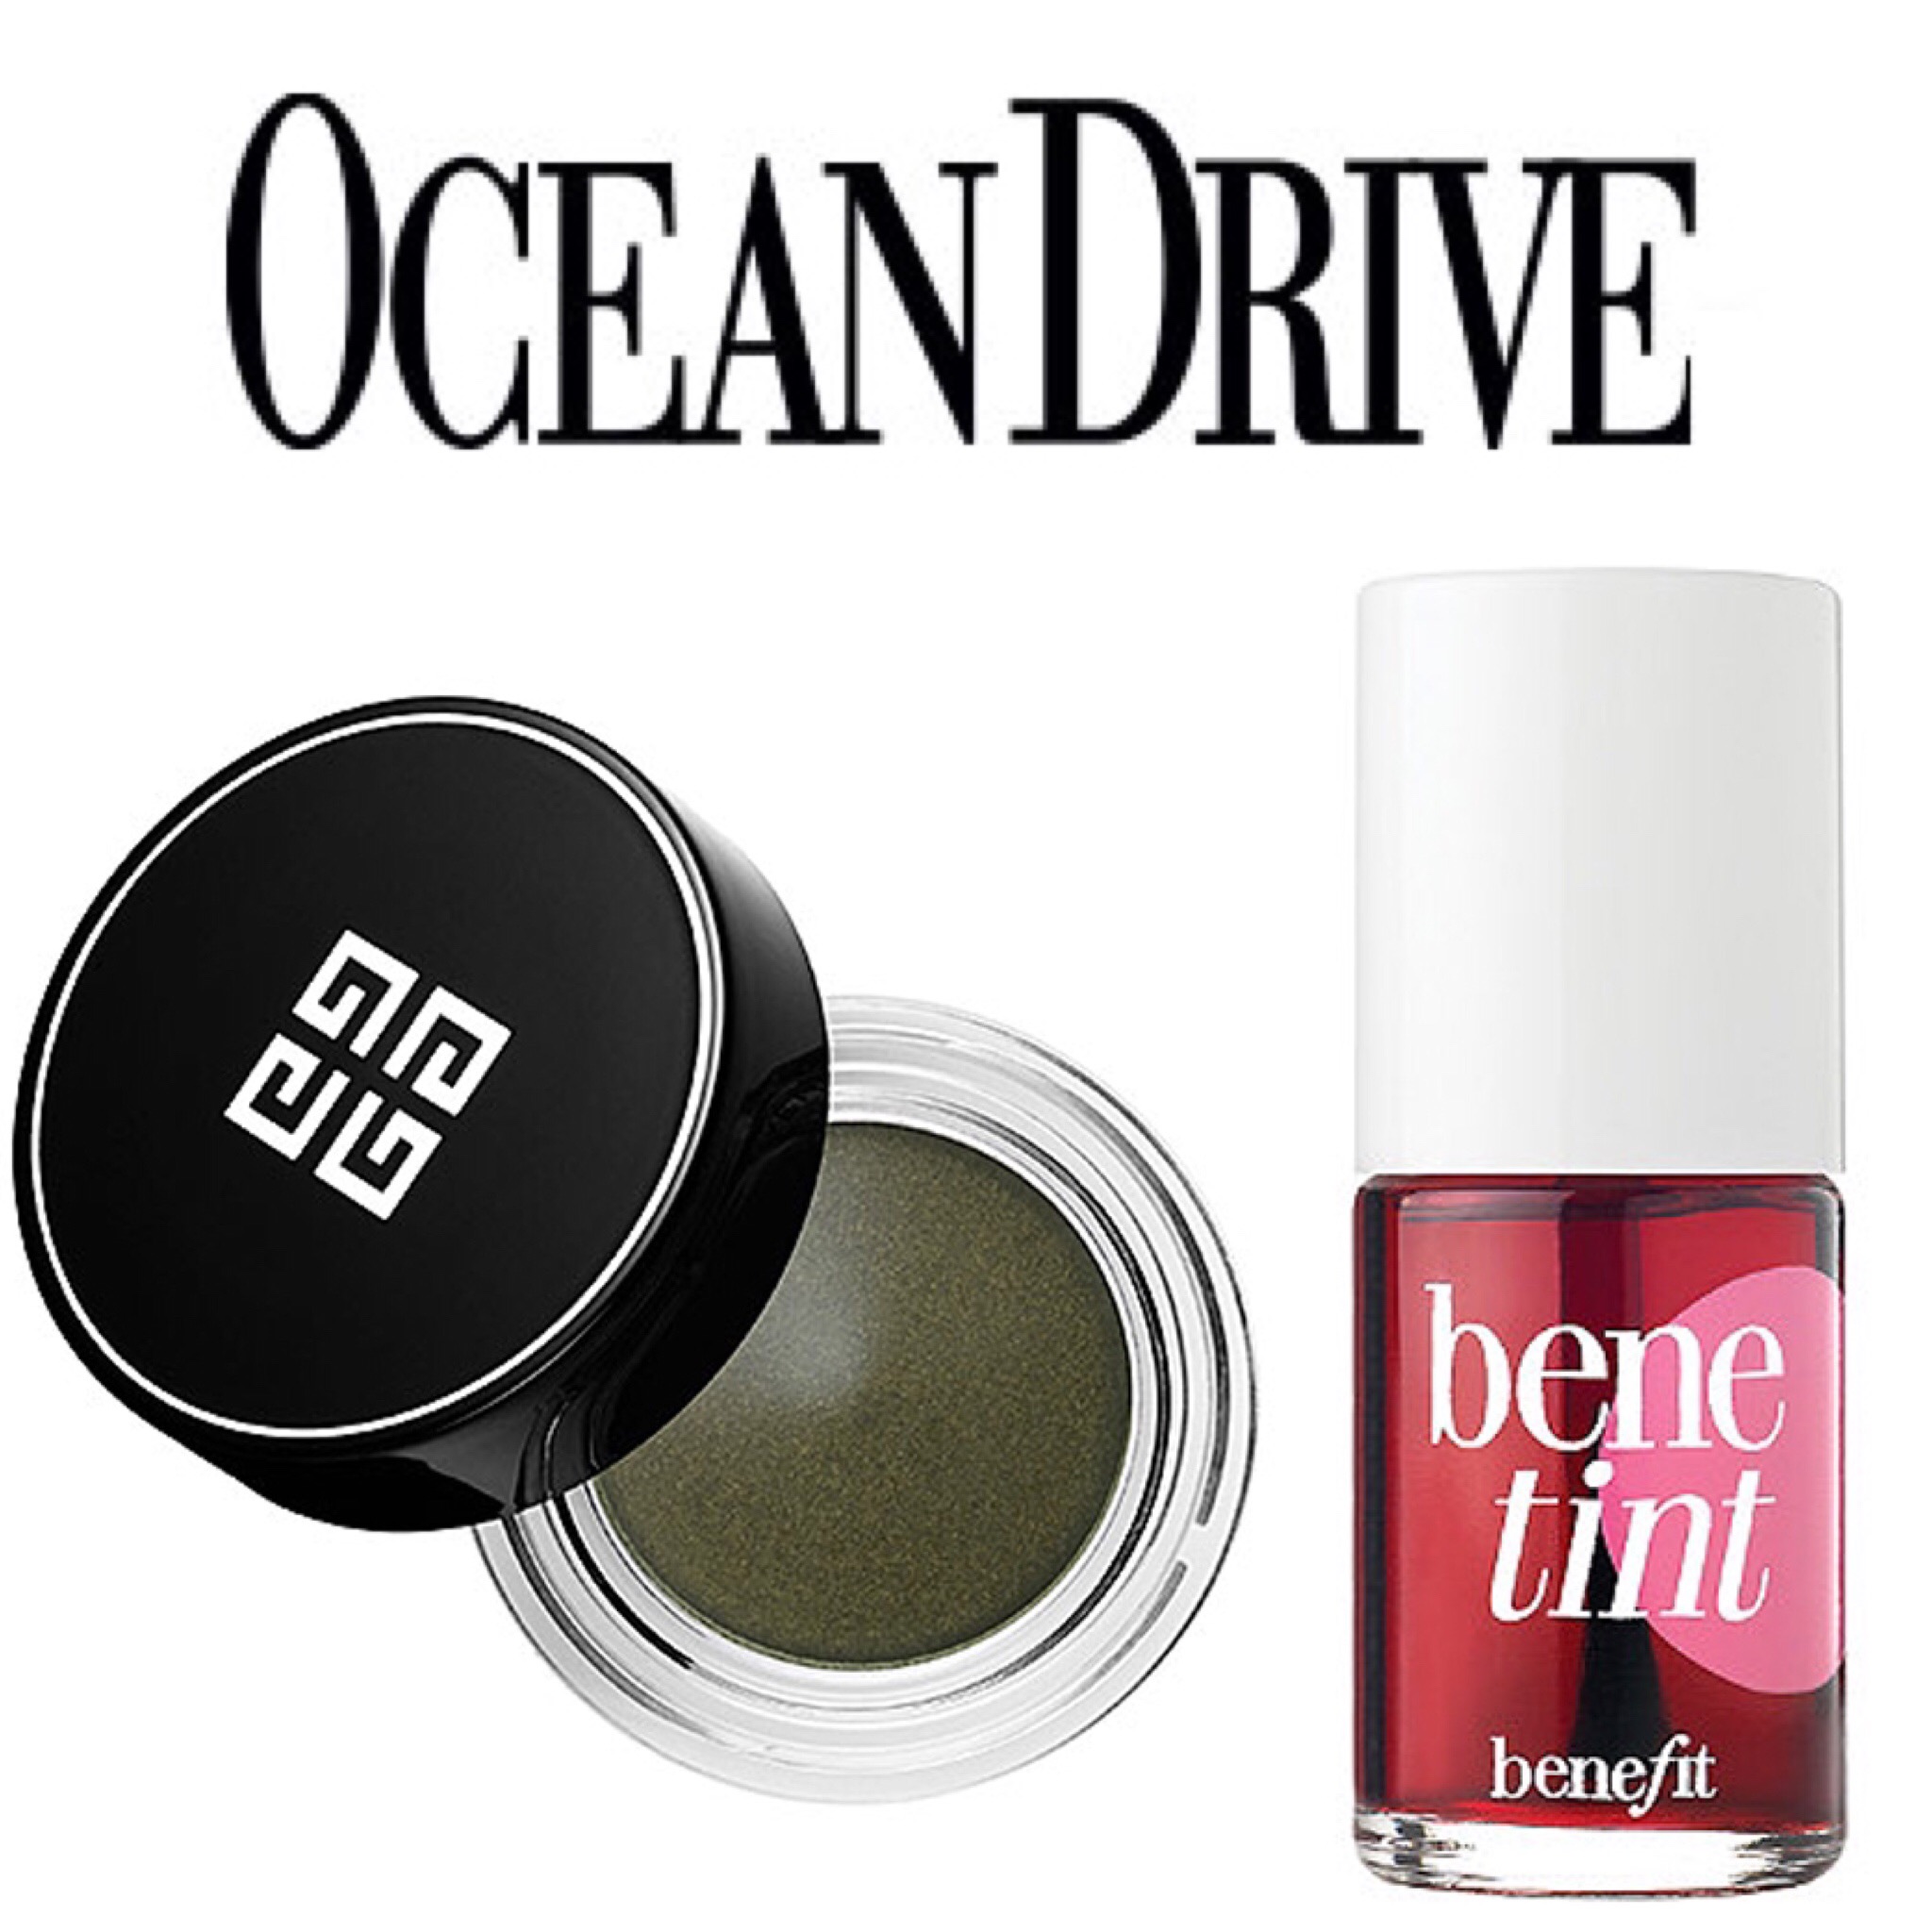  https://oceandrive.com/best-beauty-products-that-wont-smudge 